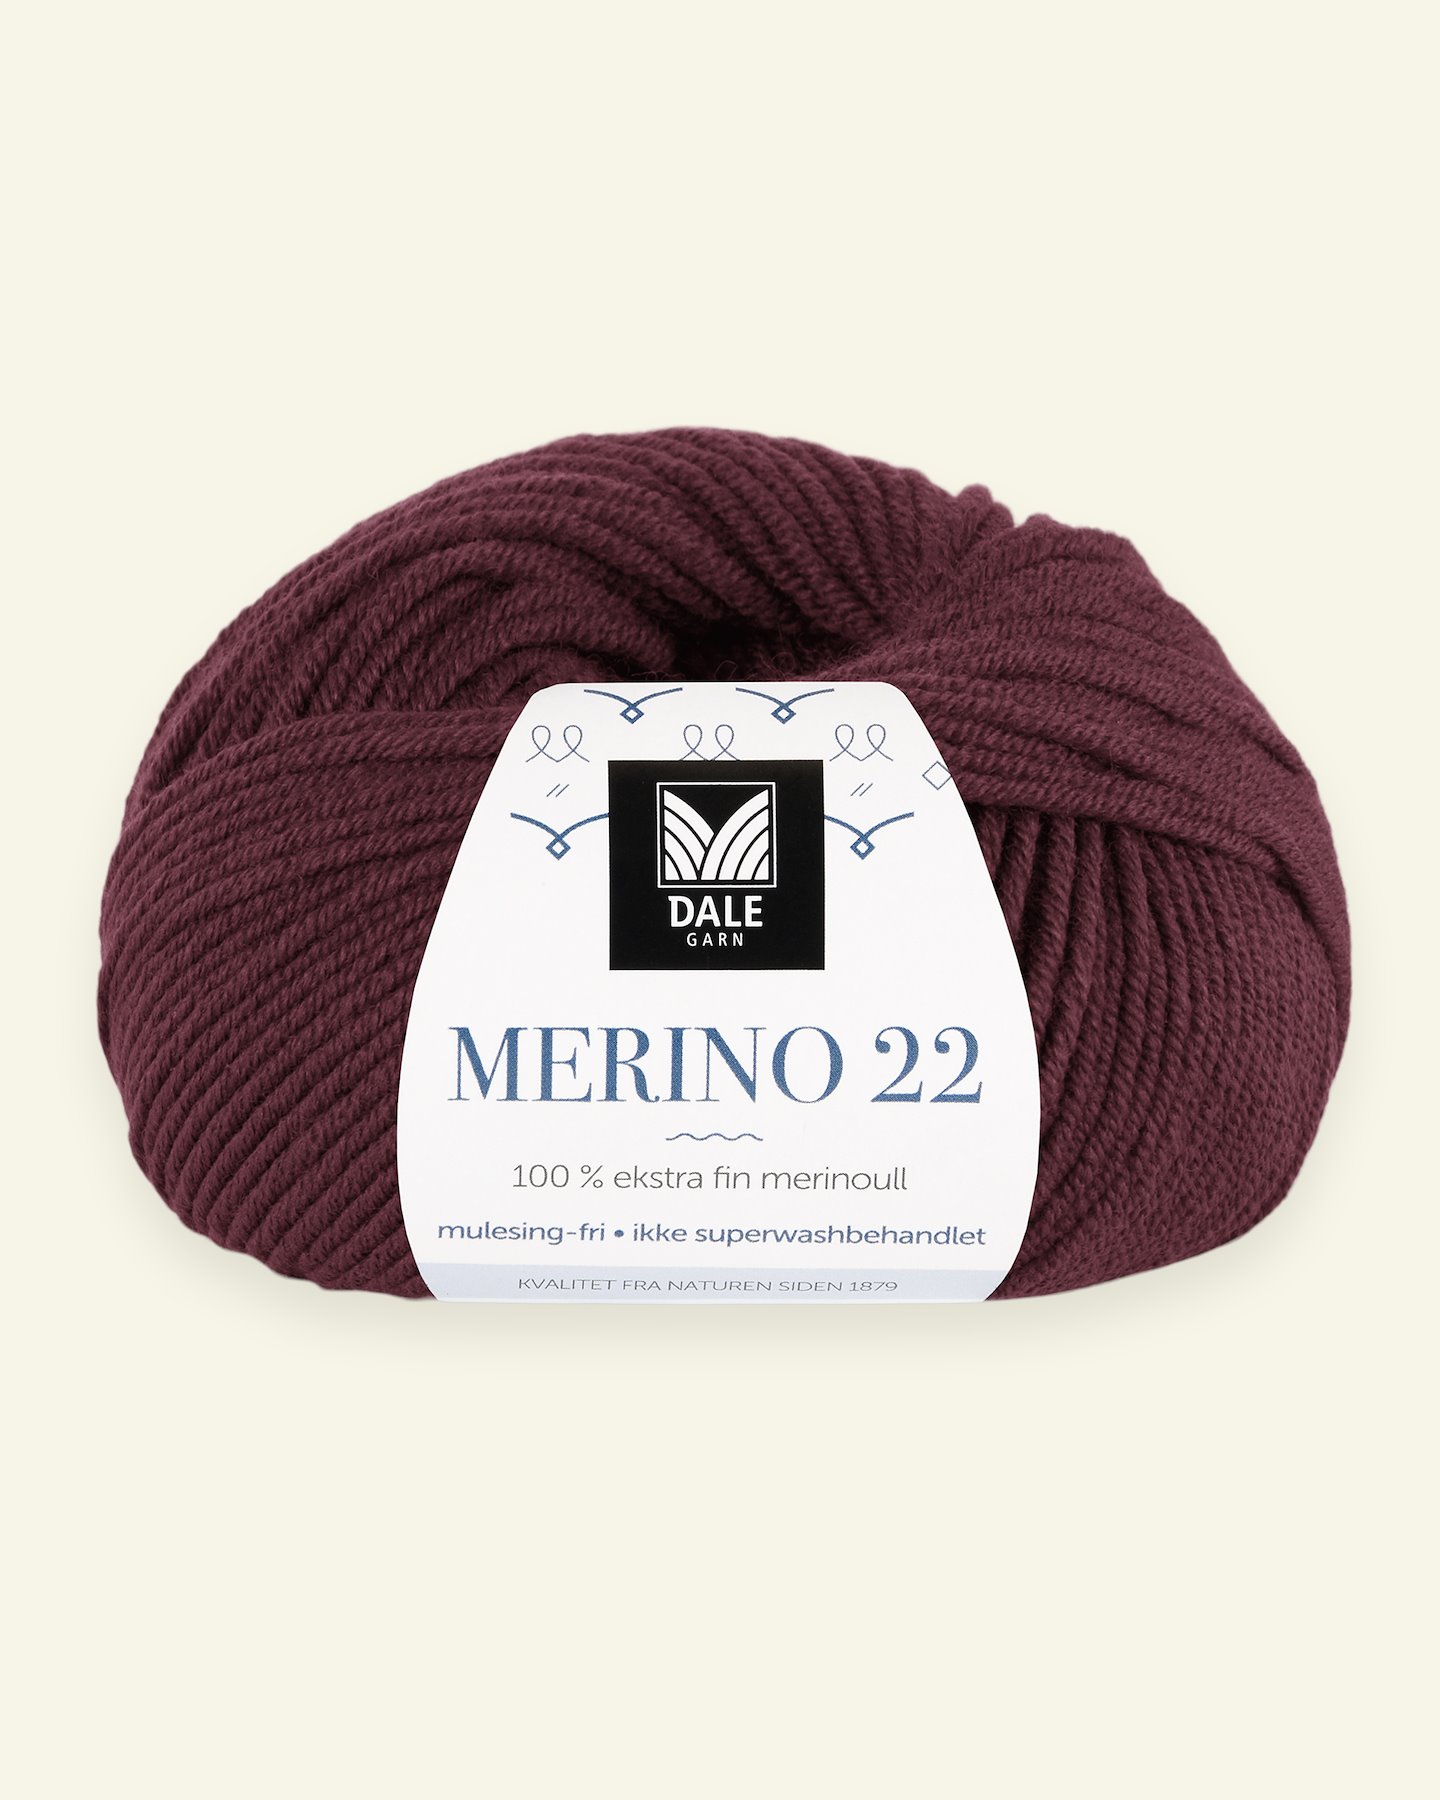 Dale Garn, 100% Extrafeine Merino-Wolle "Merino 22", bordeaux (2018) 90000379_pack